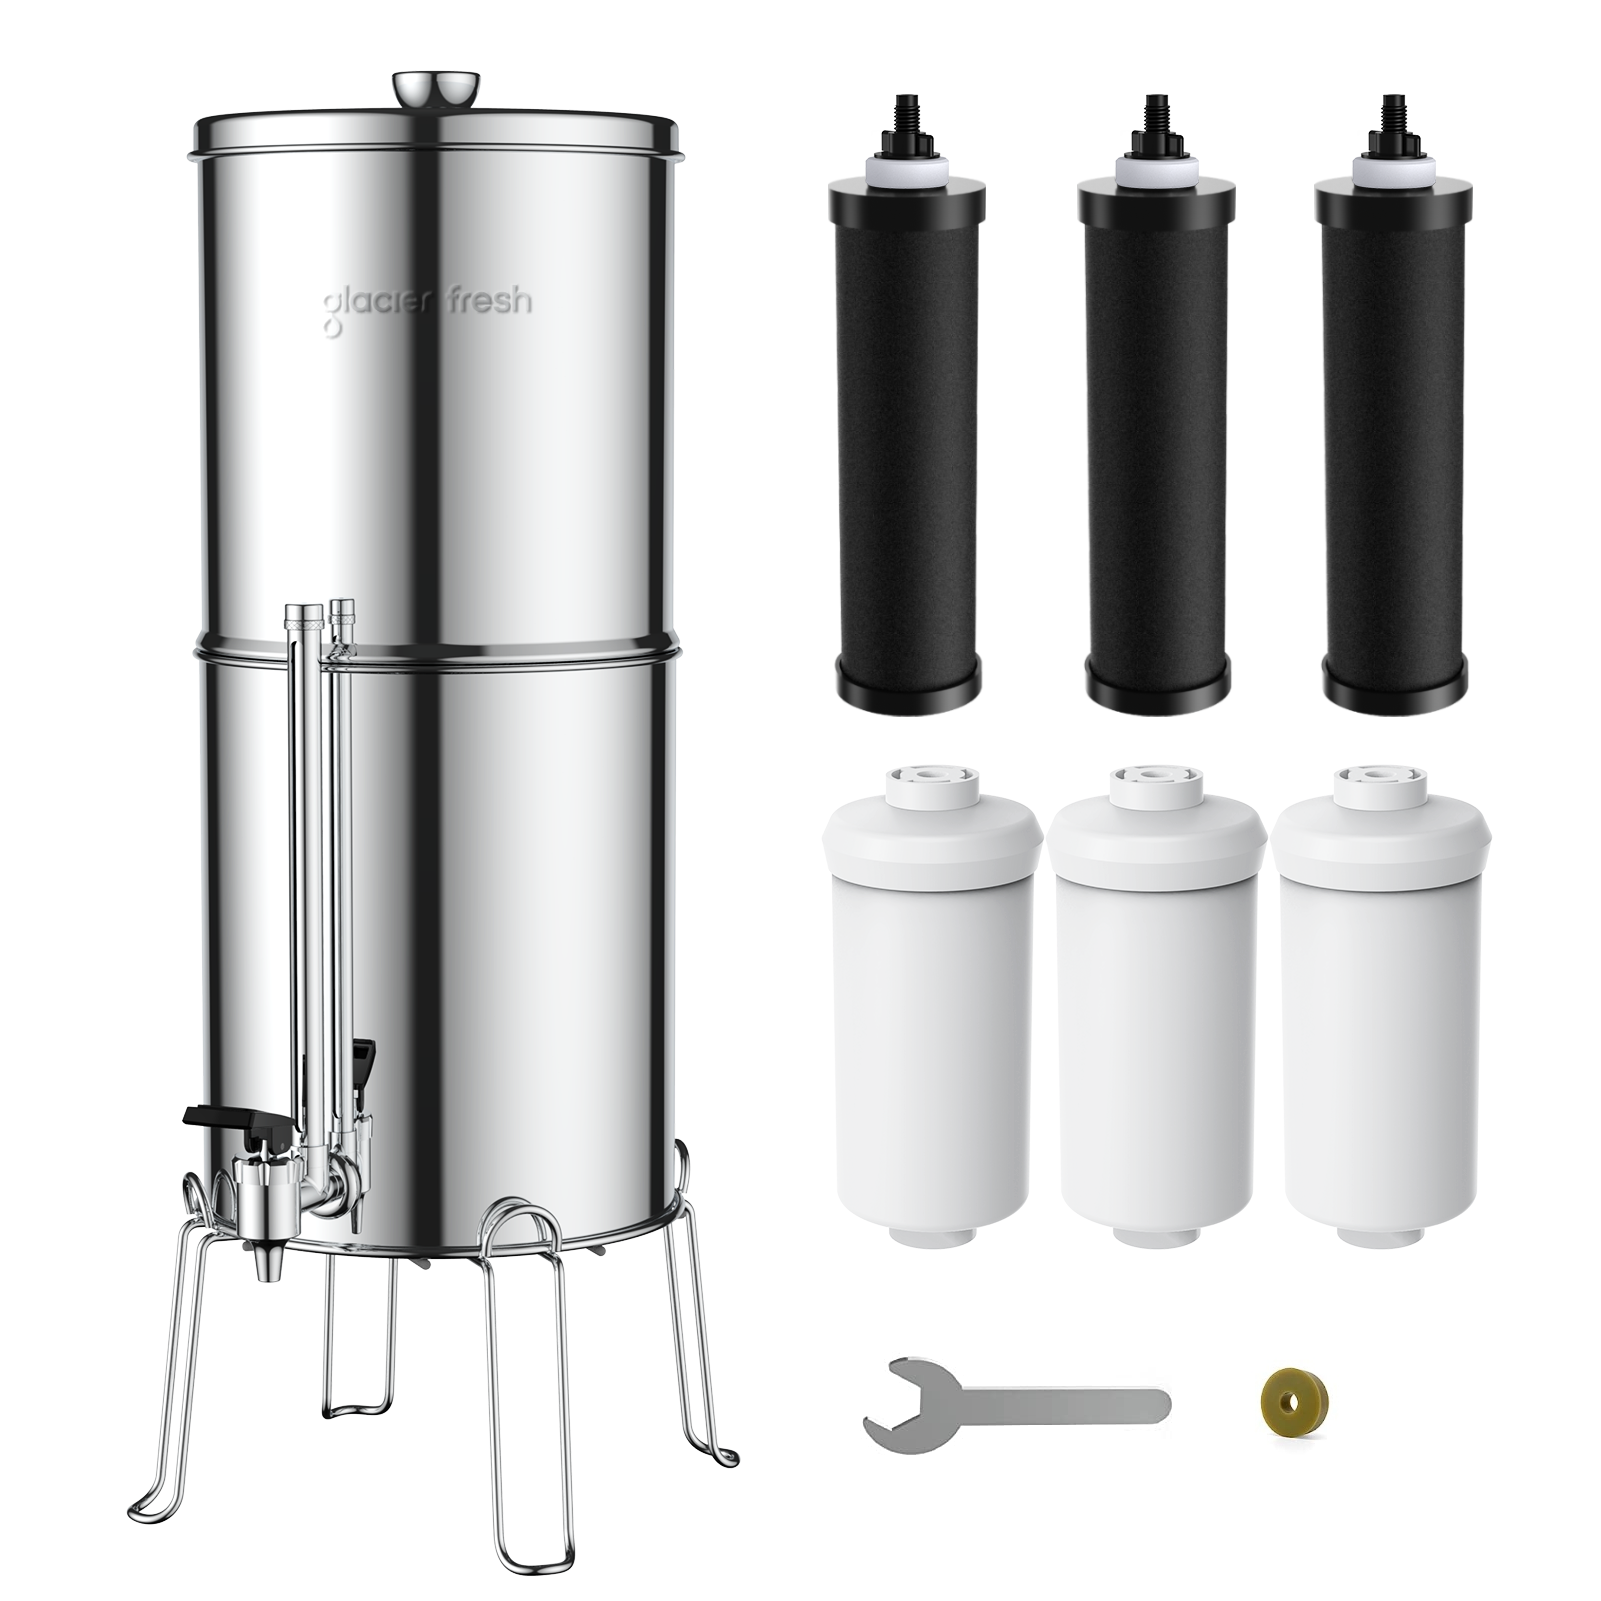 Berkey Replacement Water Filter System